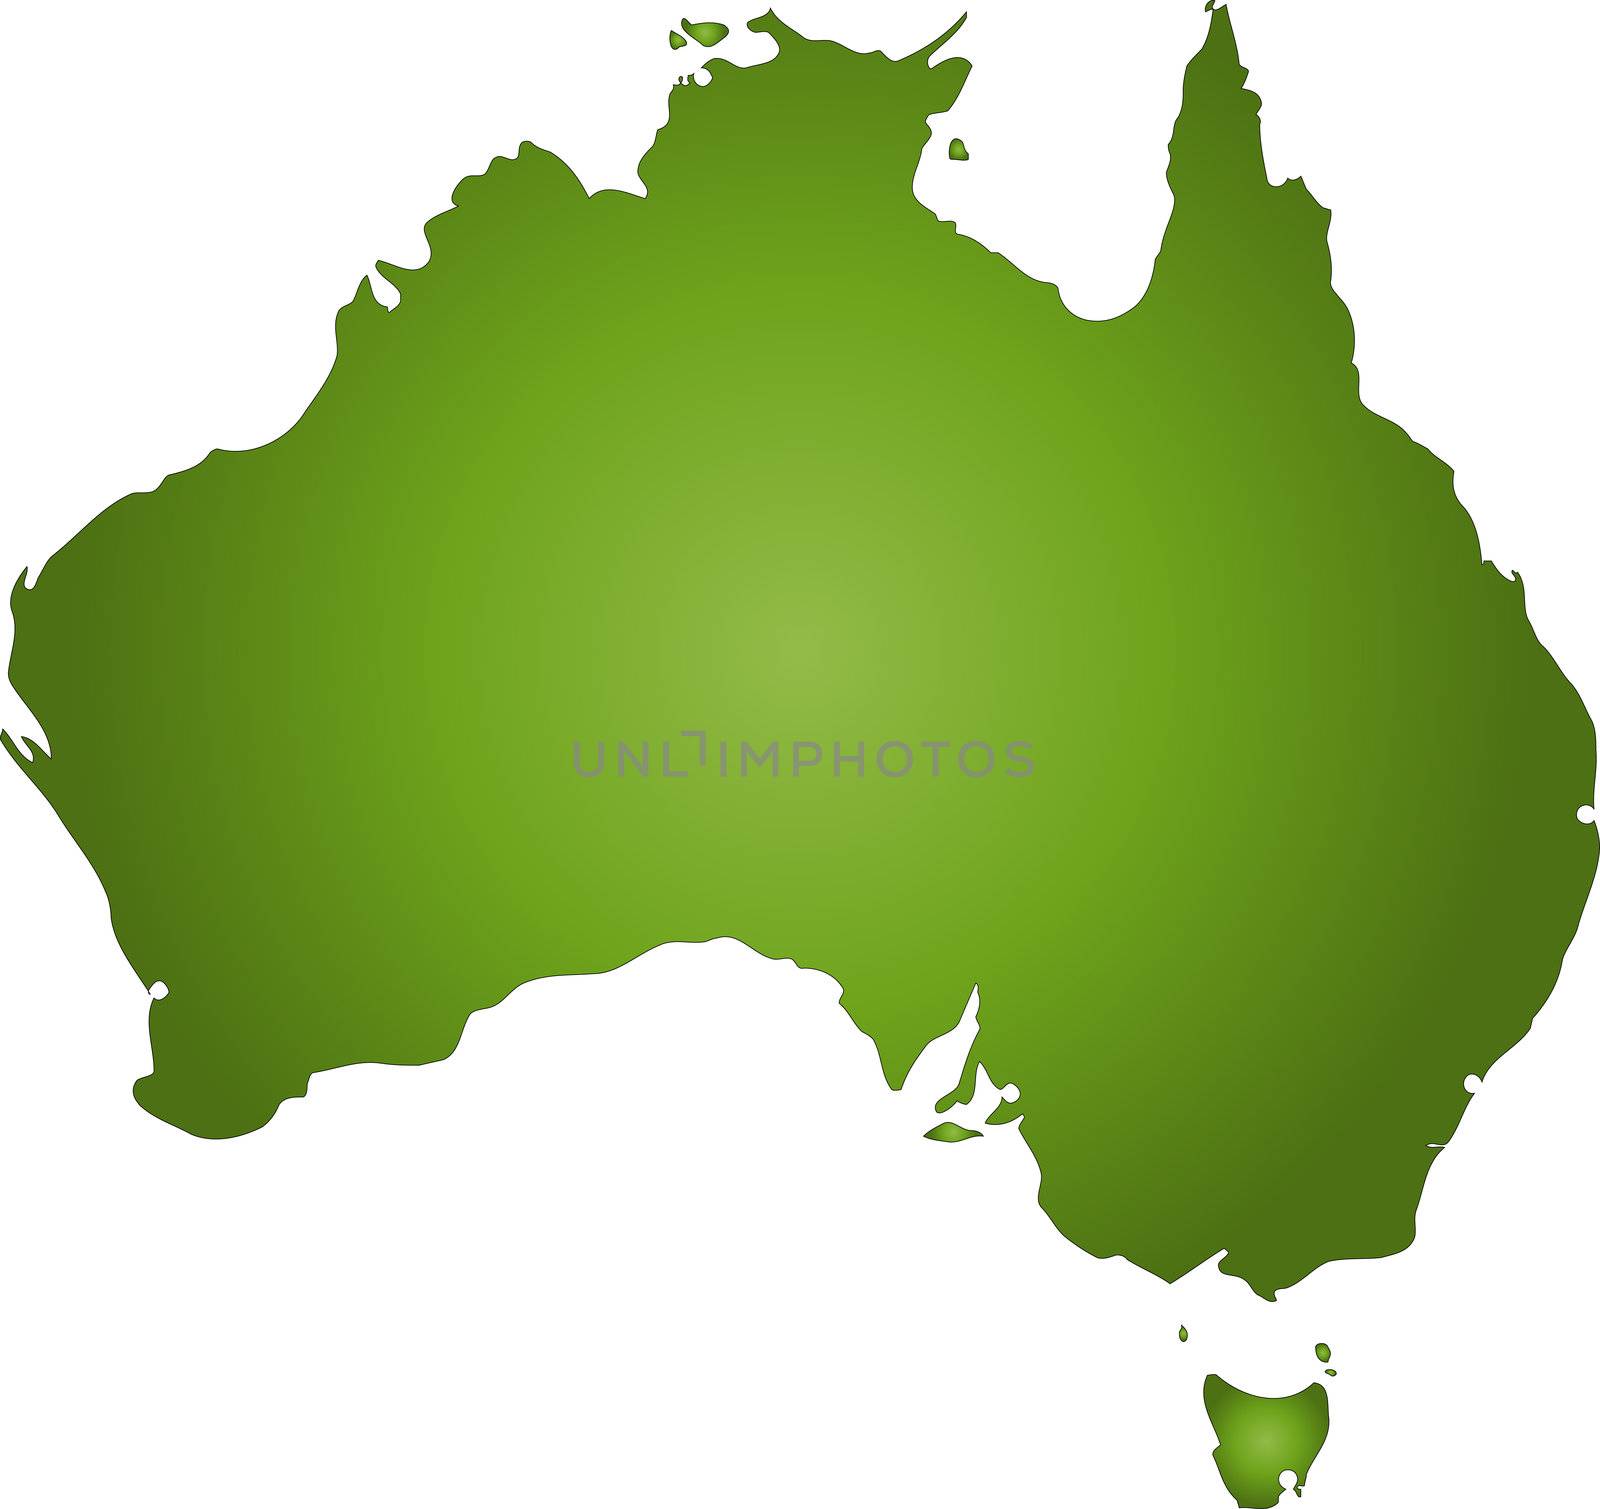 Map Of Australia by kaarsten